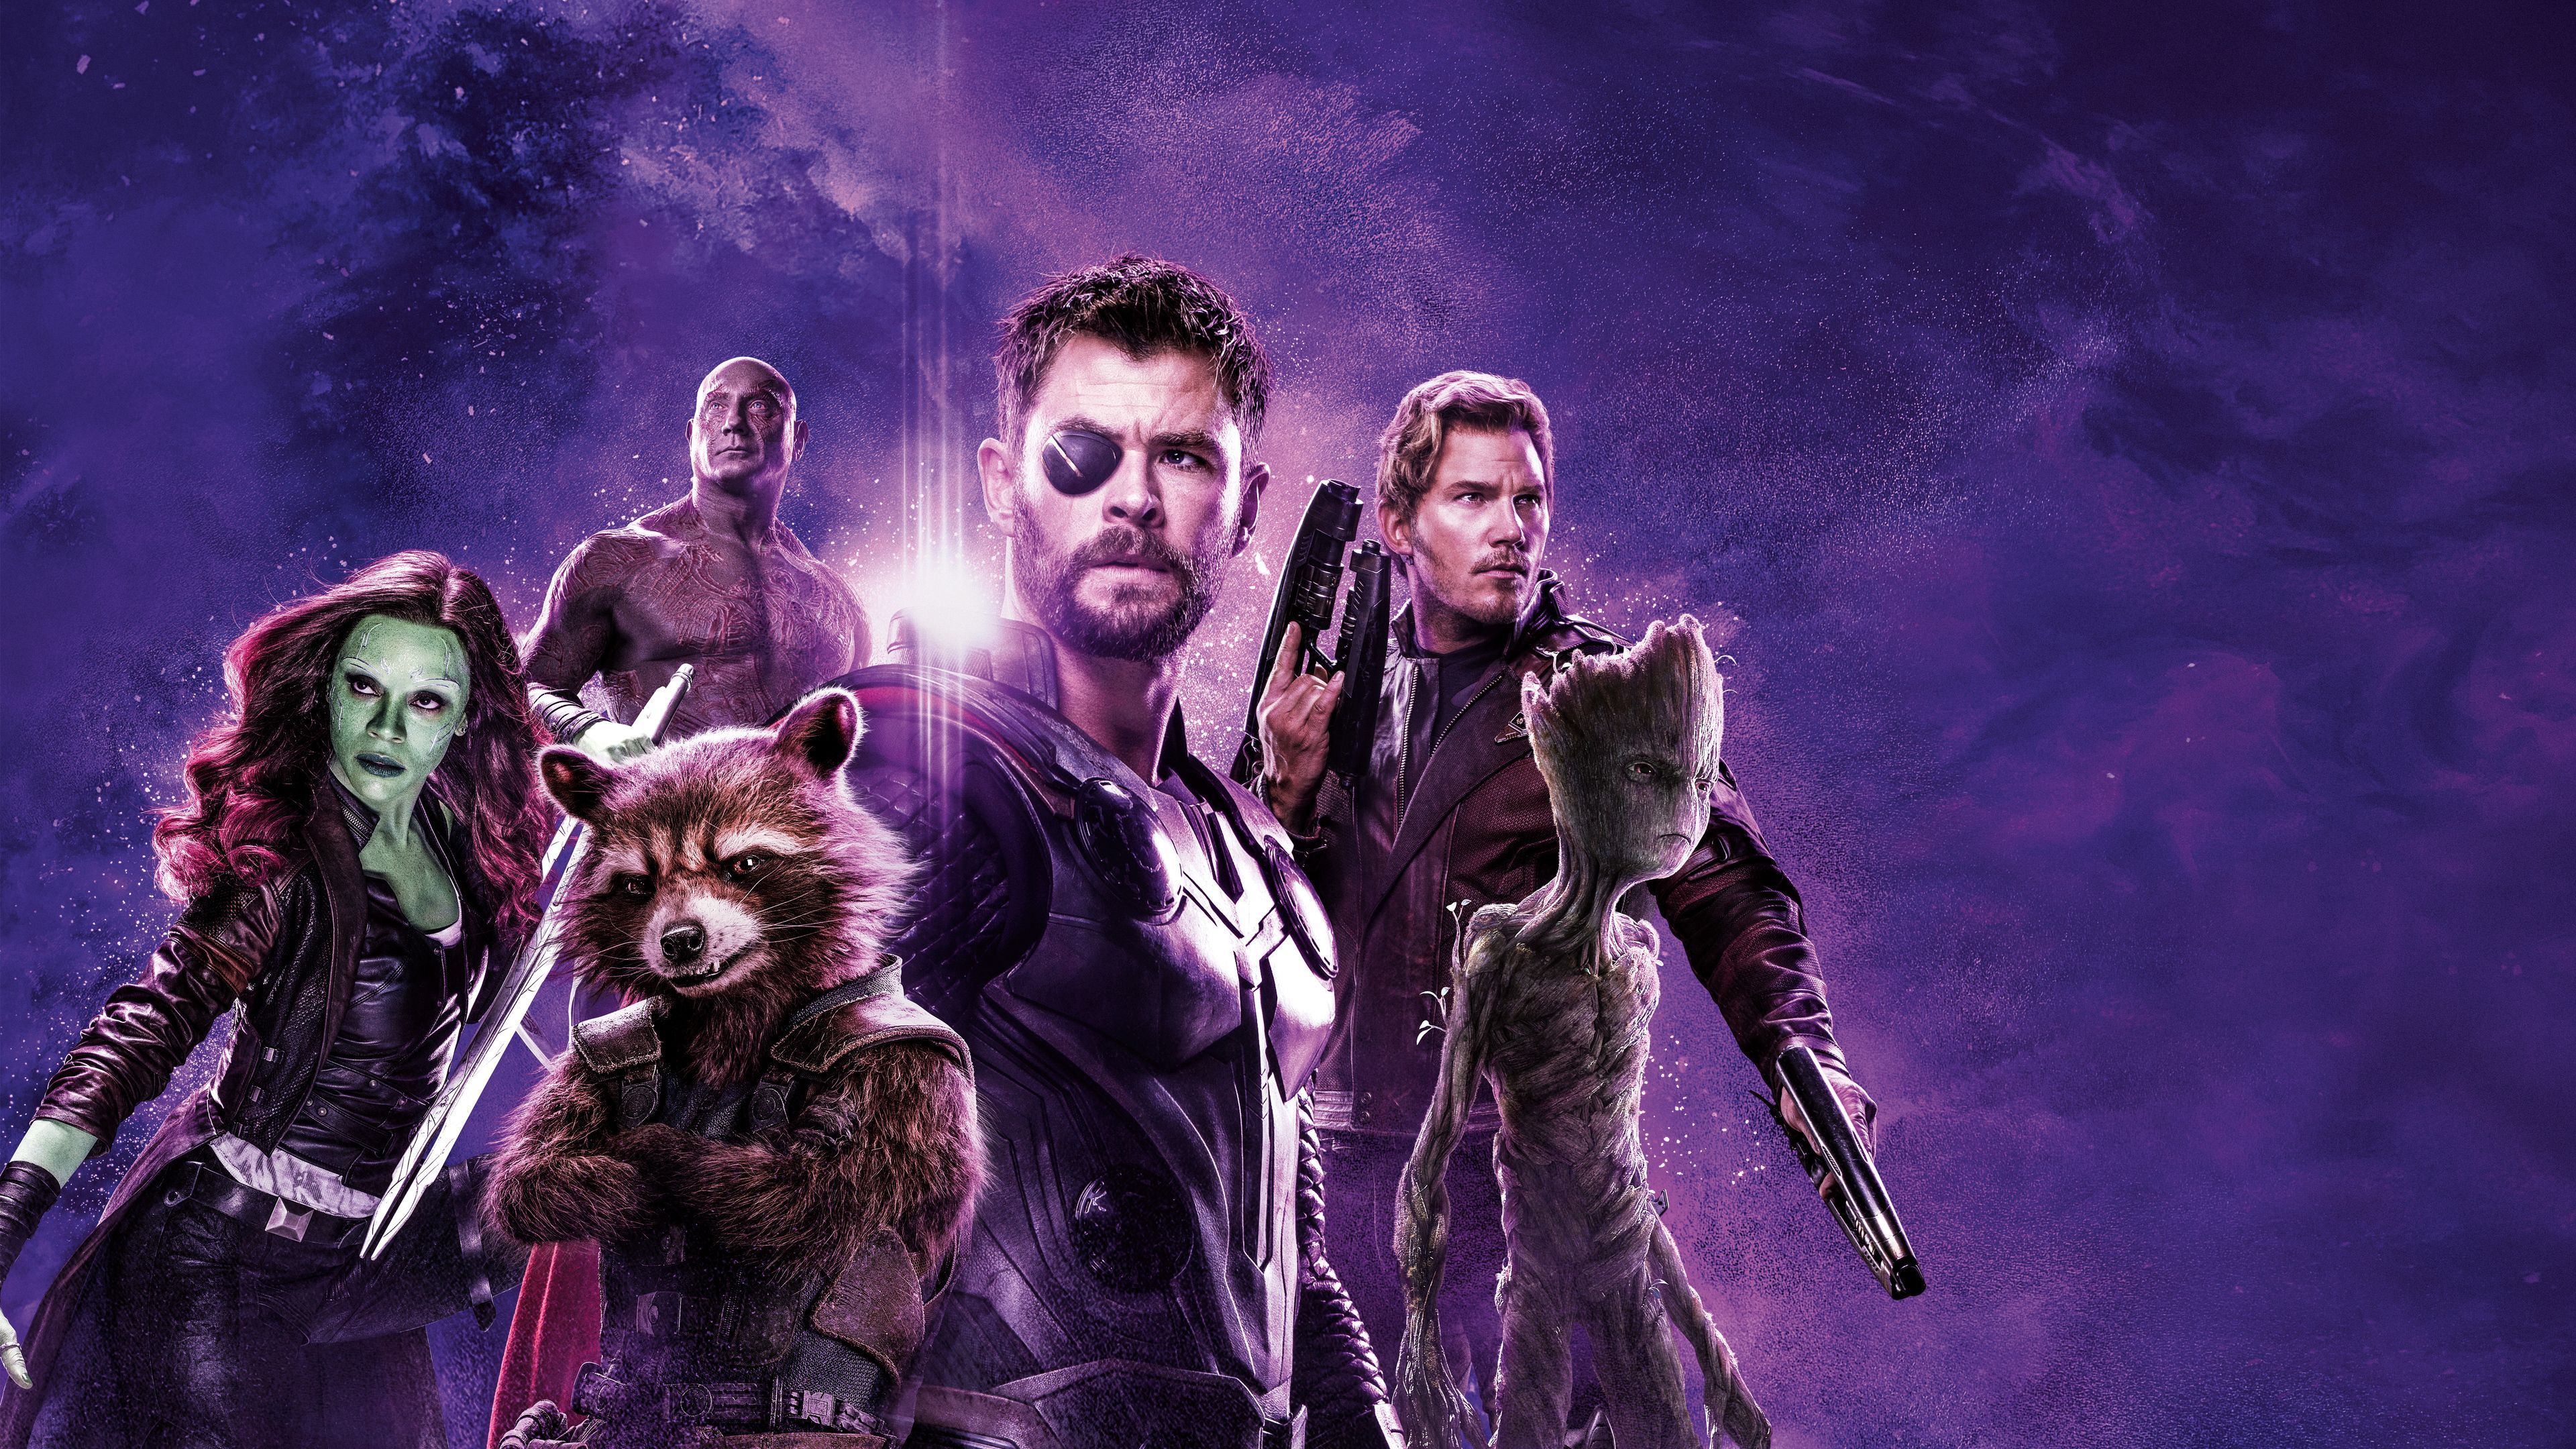 Avengers Infinity War Power Stone Poster 4k thor wallpaper, star lord wallpaper, rocket raccoon wallpaper, p. Avengers, Movie wallpaper, Avengers infinity war